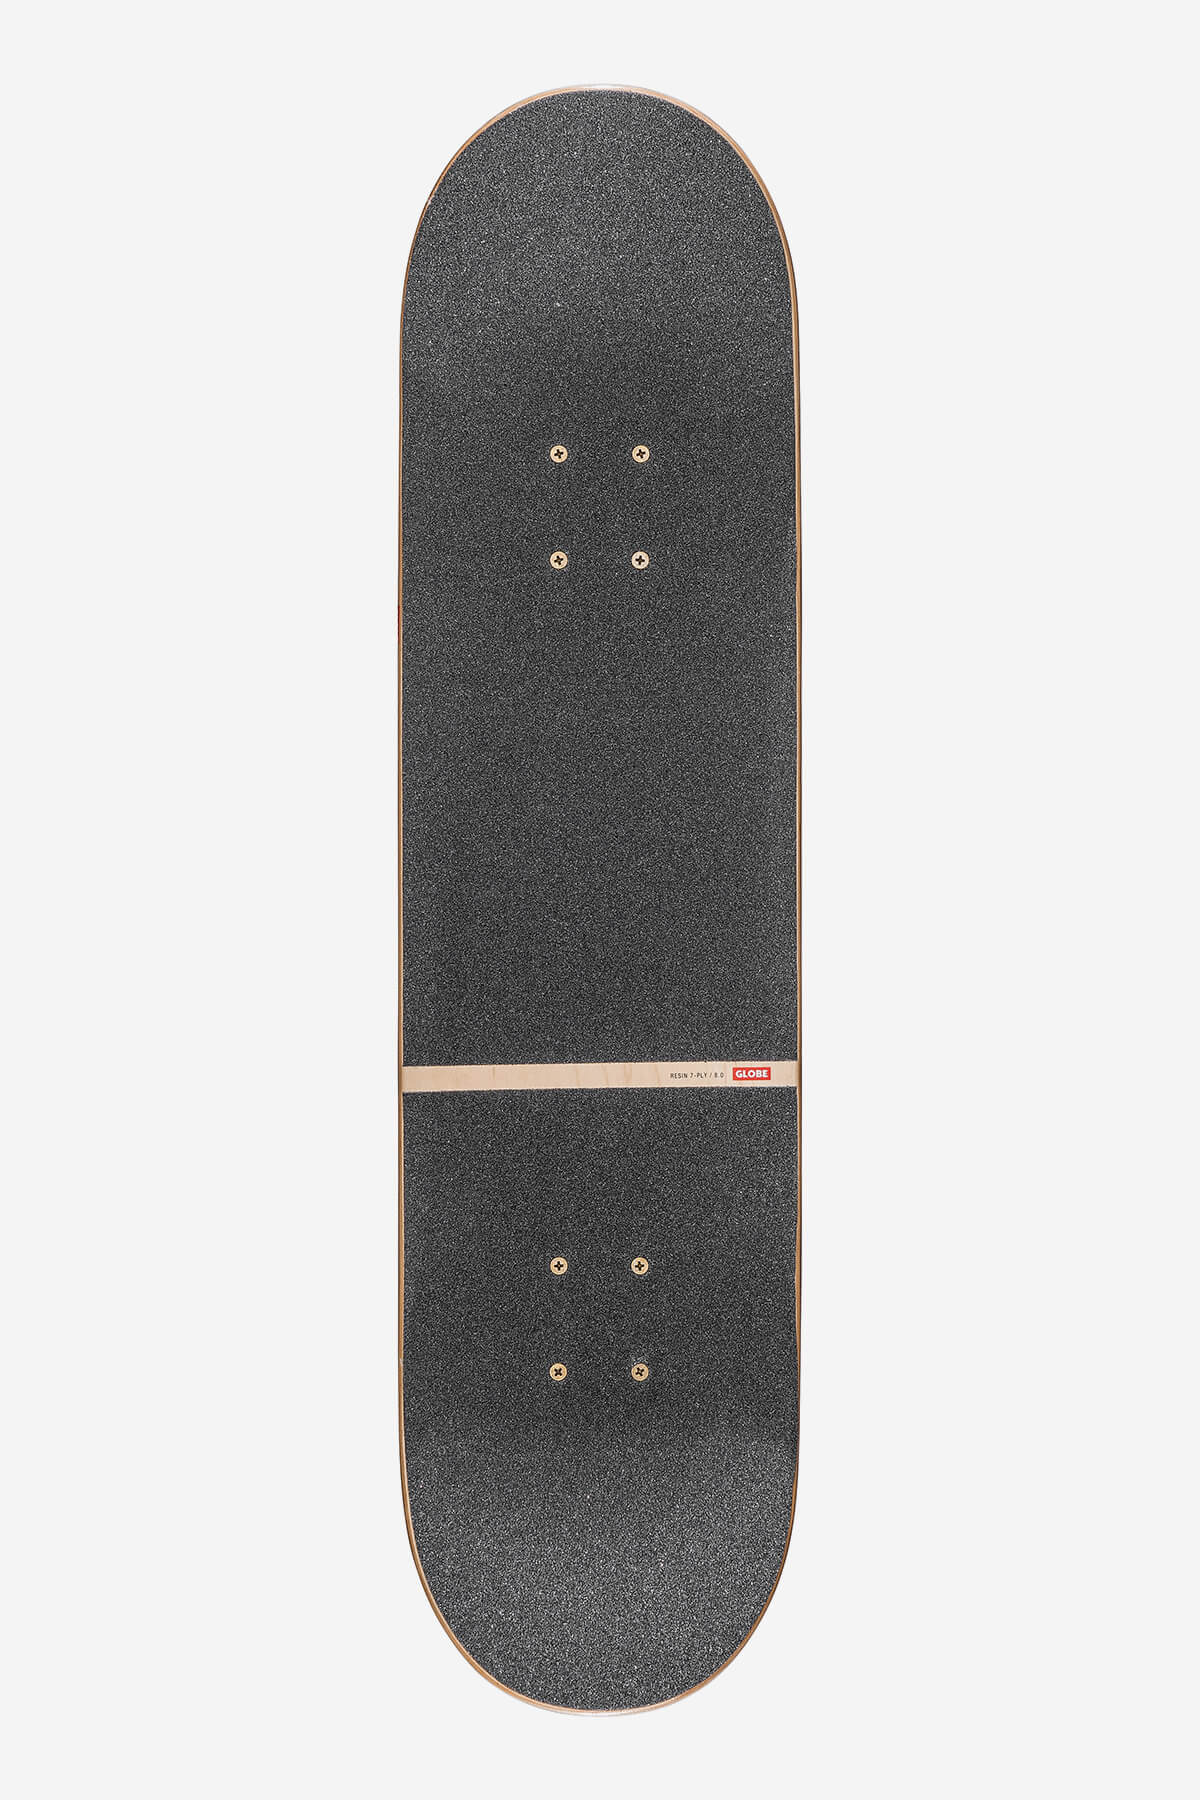 g3 bar noir 8.0" complet skateboard